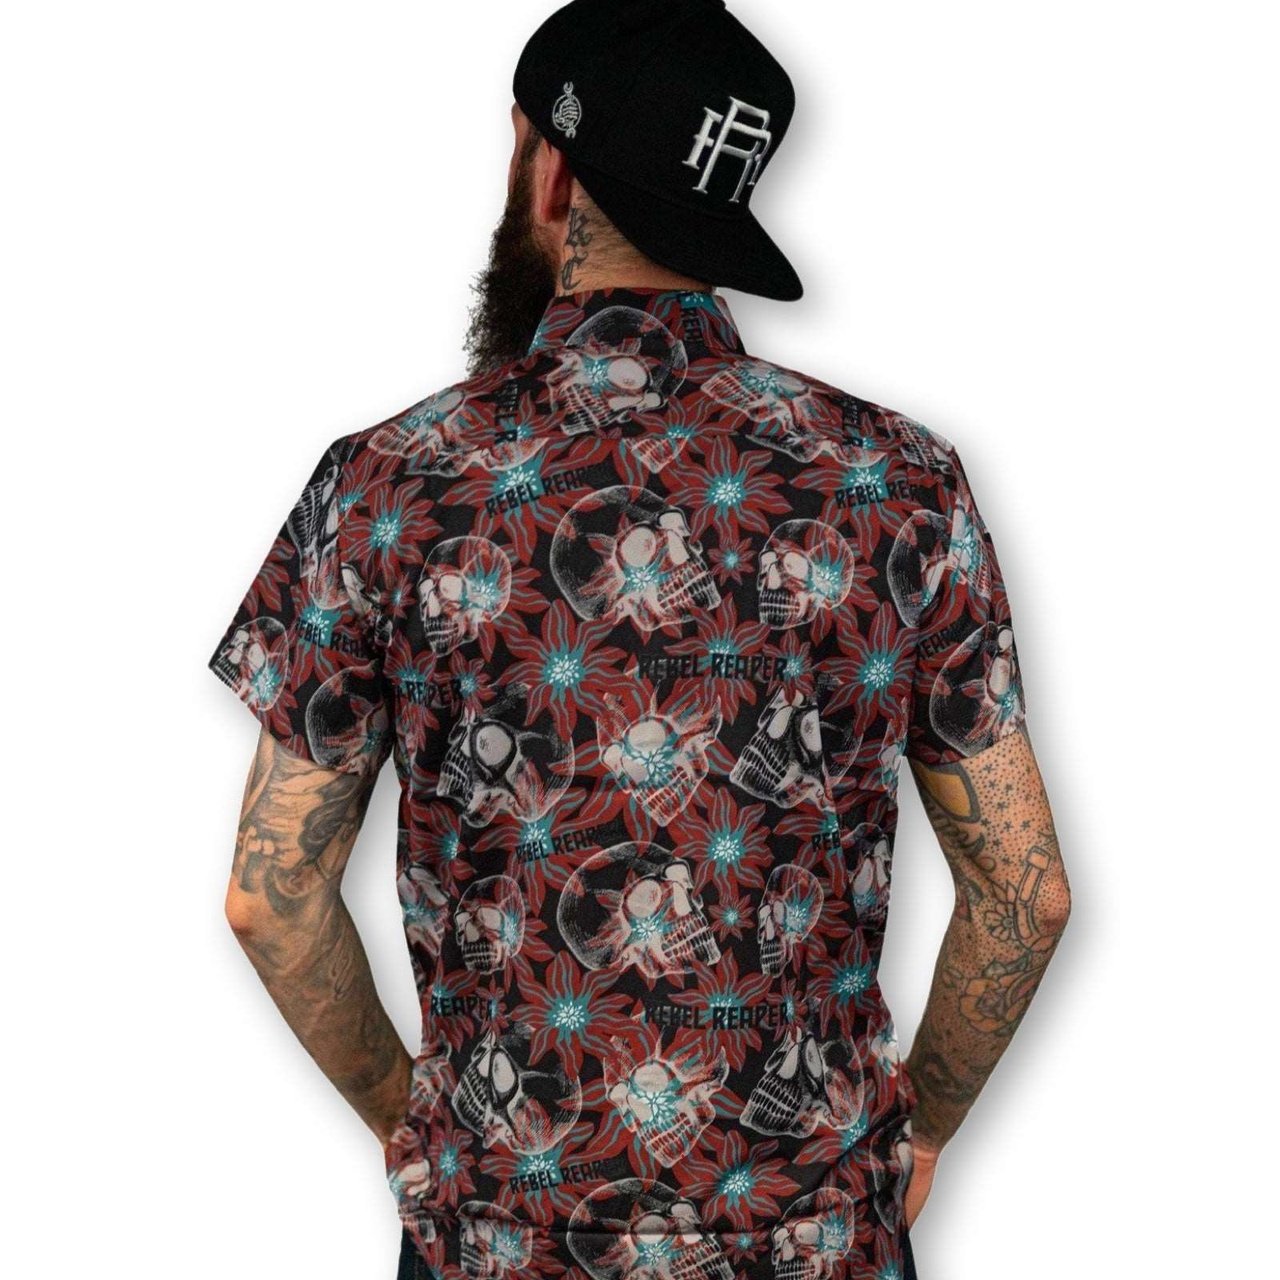 Dark Tropics Shirt - Rebel Reaper Clothing Company Button Up Shirt Men's